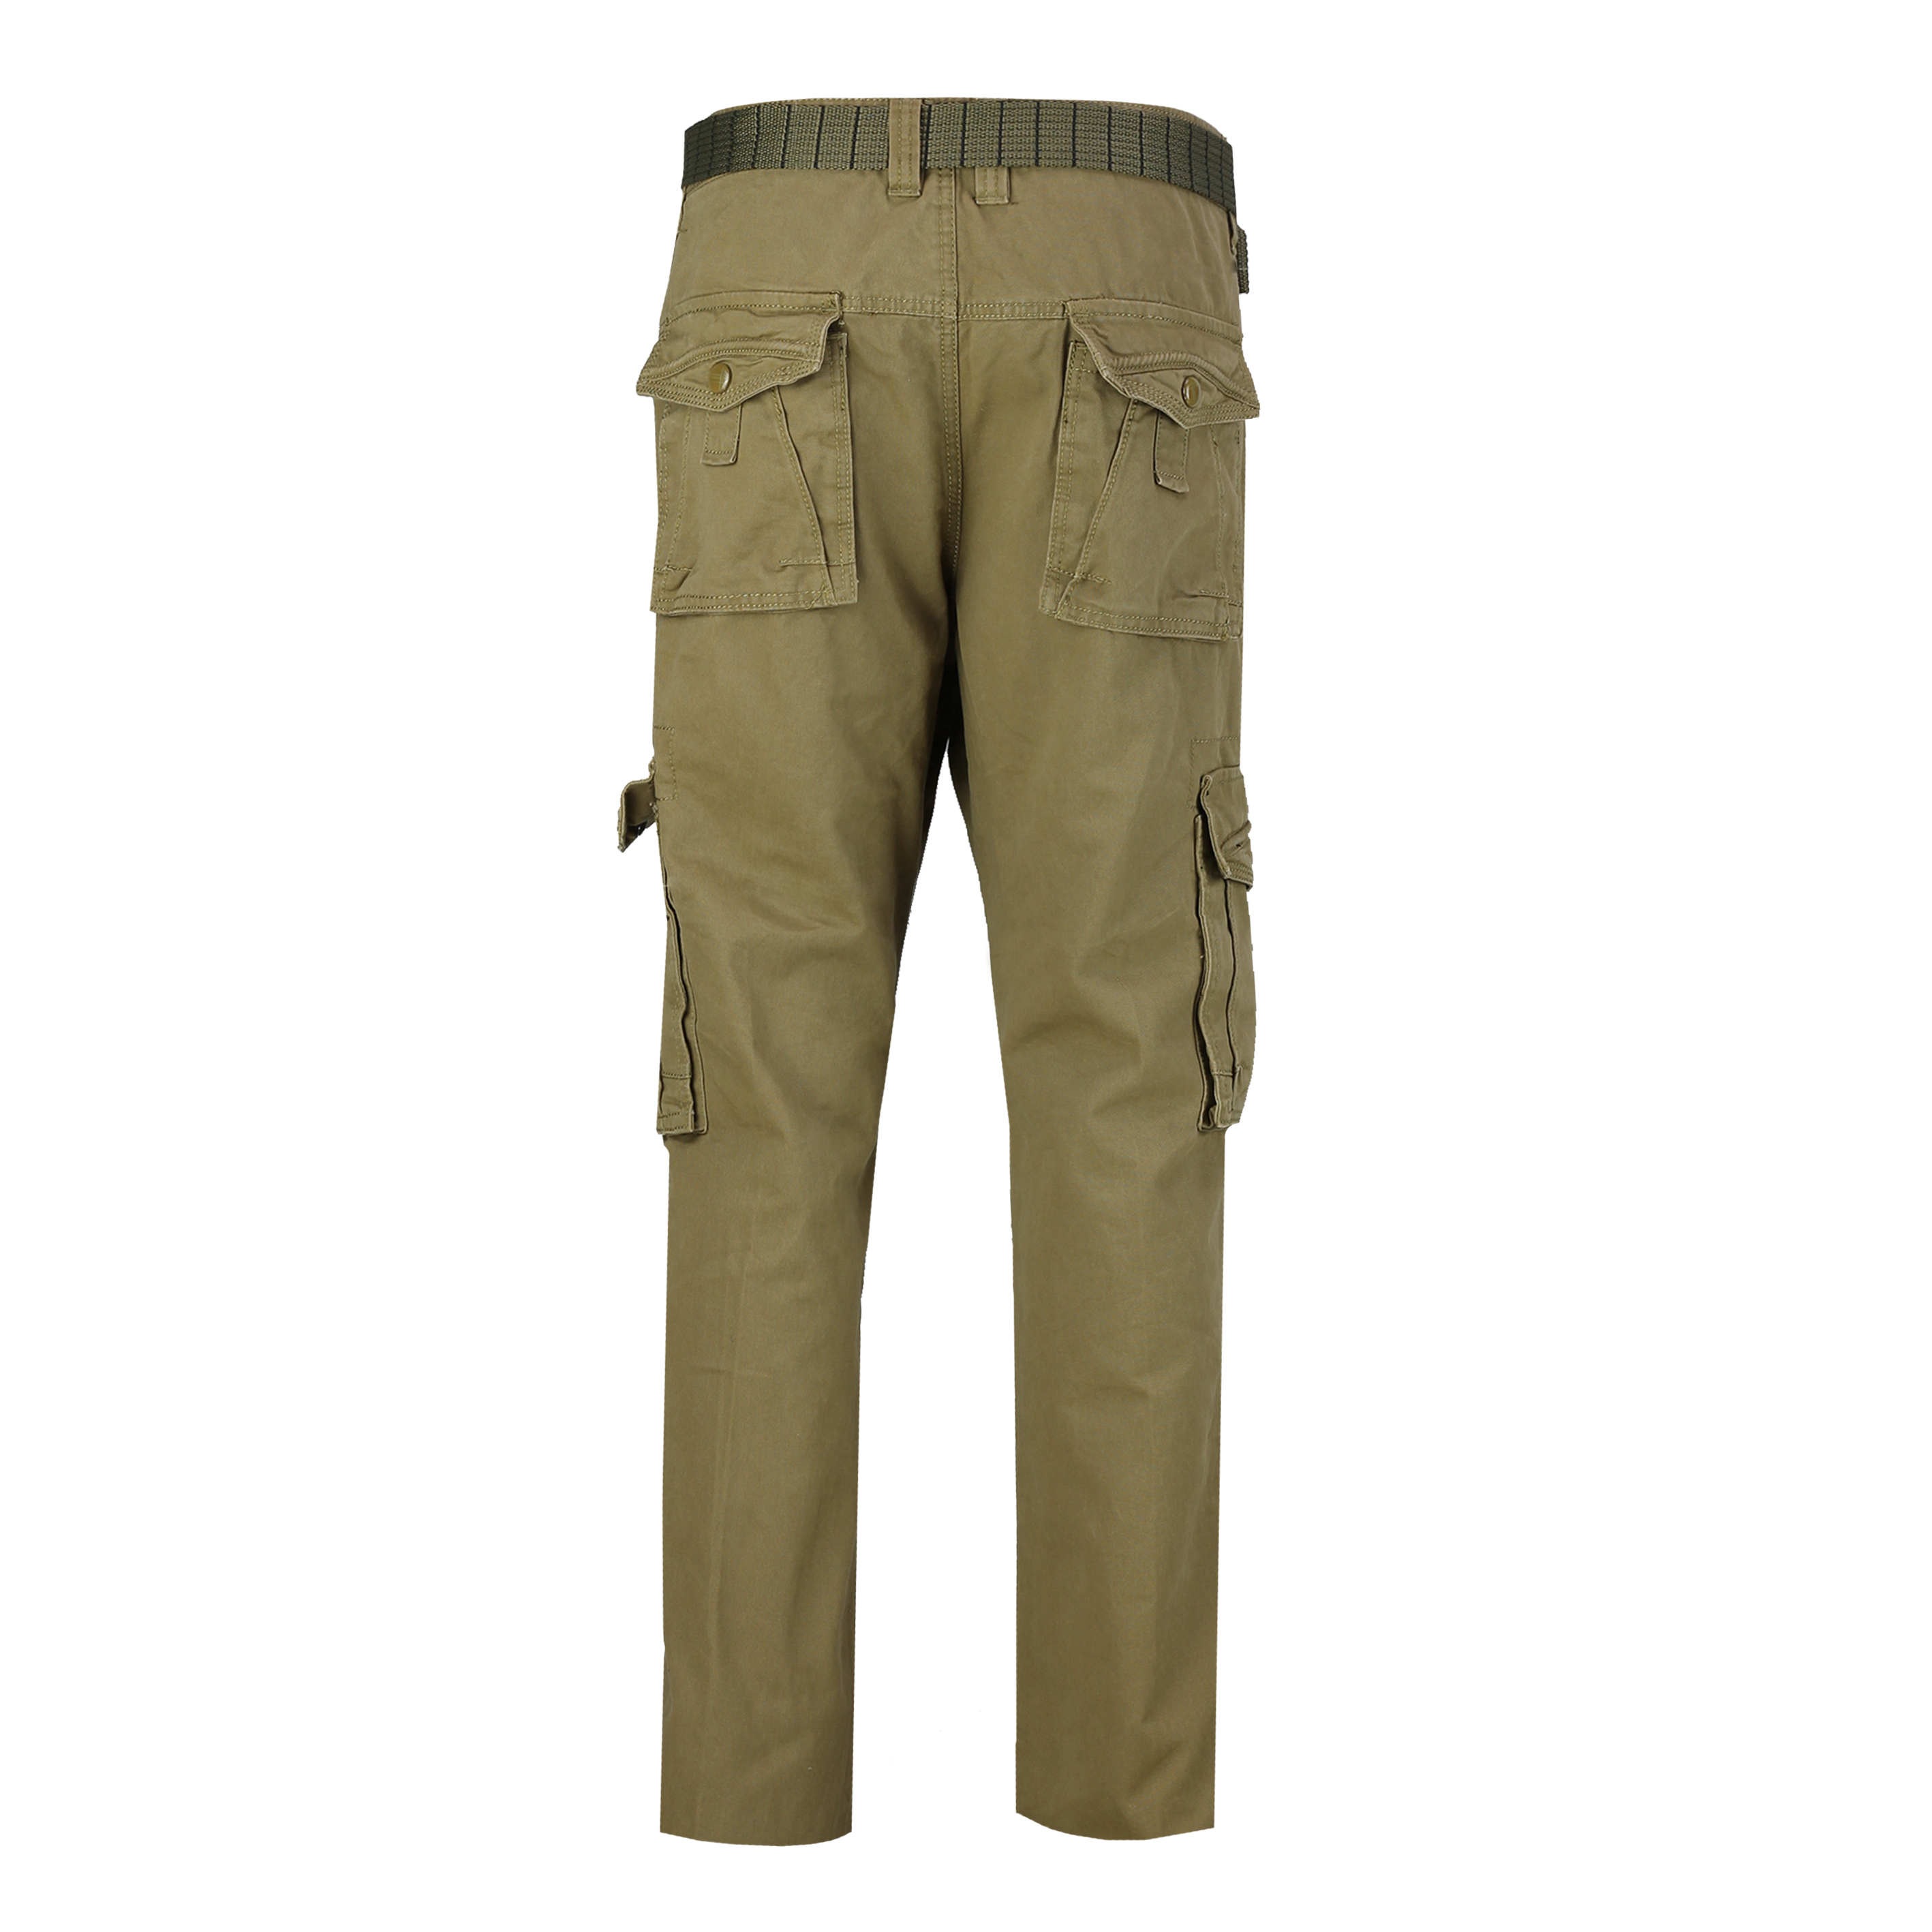 Mens Combat Cargo Trousers Work Casual Utility Cotton Pants Multi ...